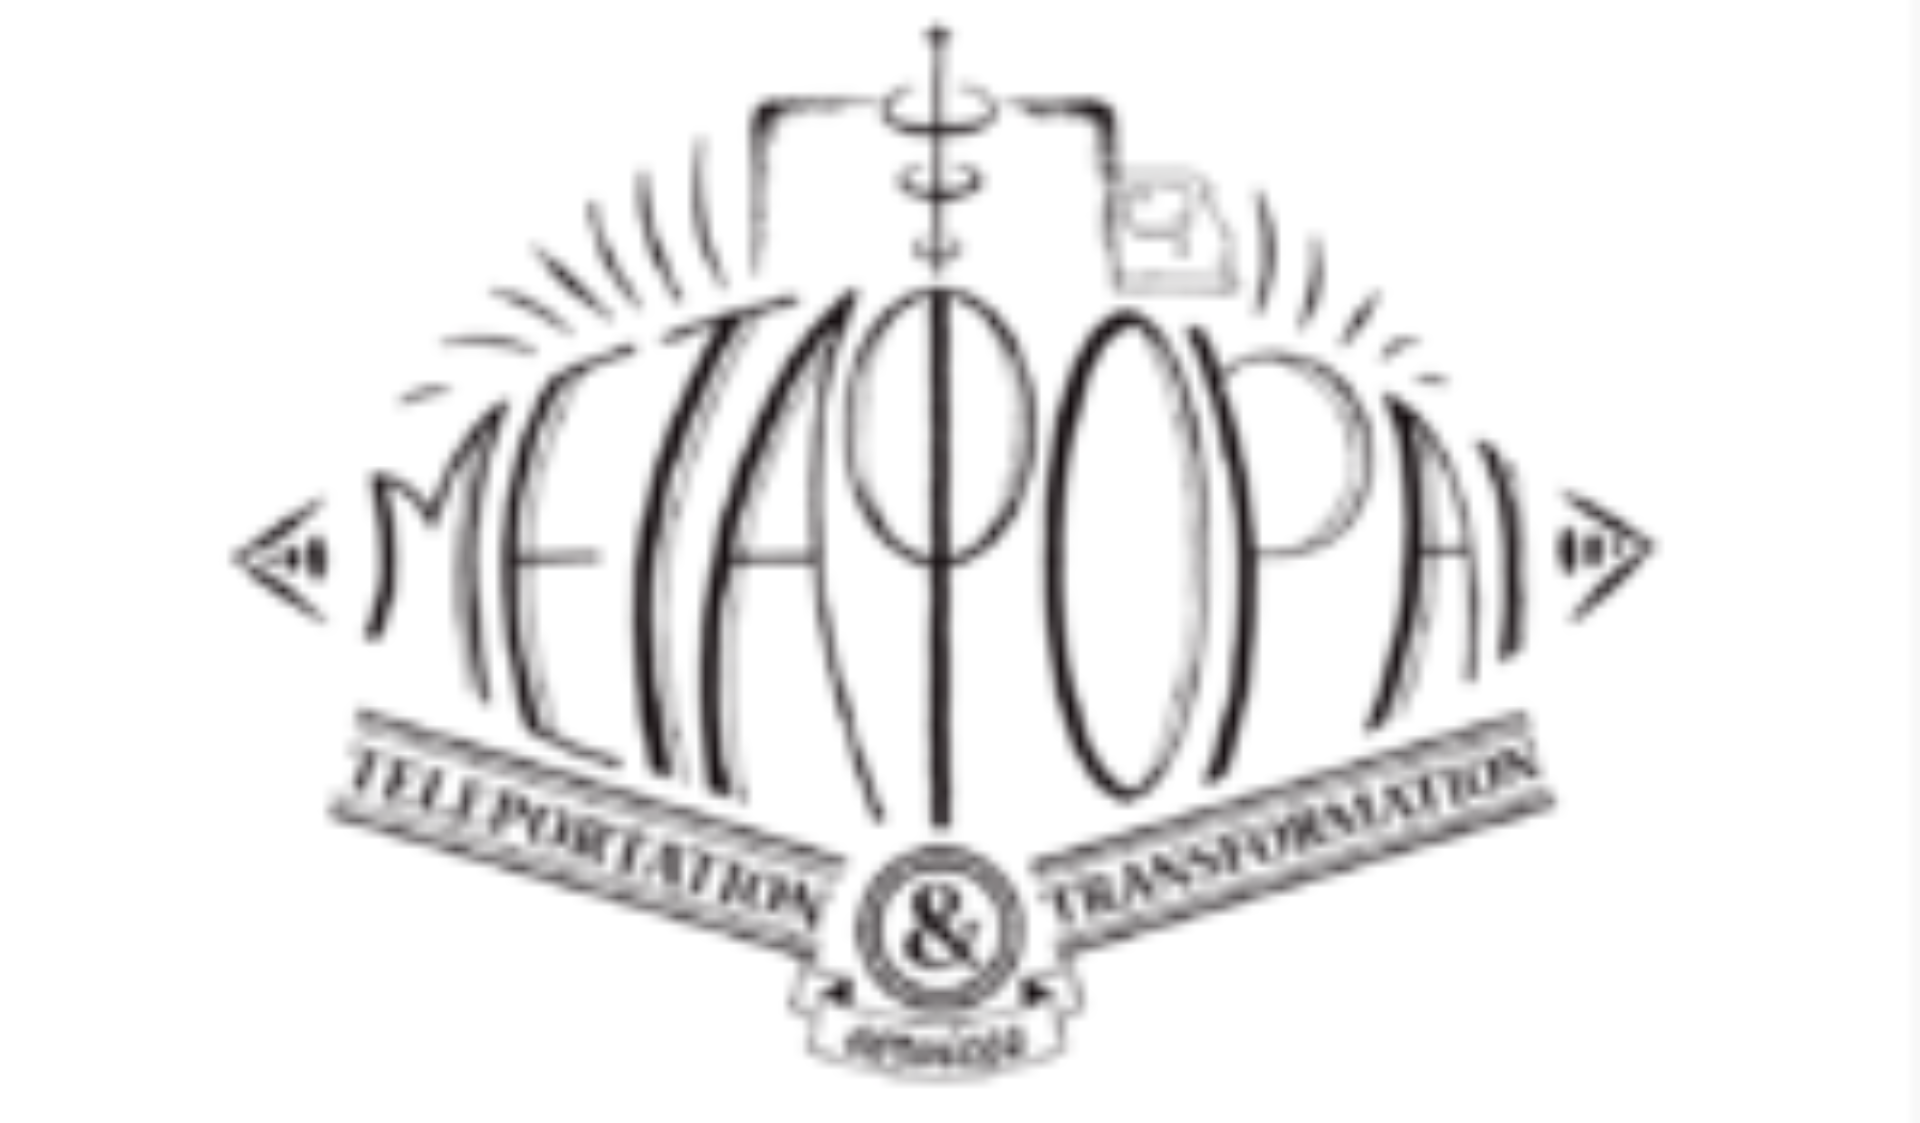 Metaphorai